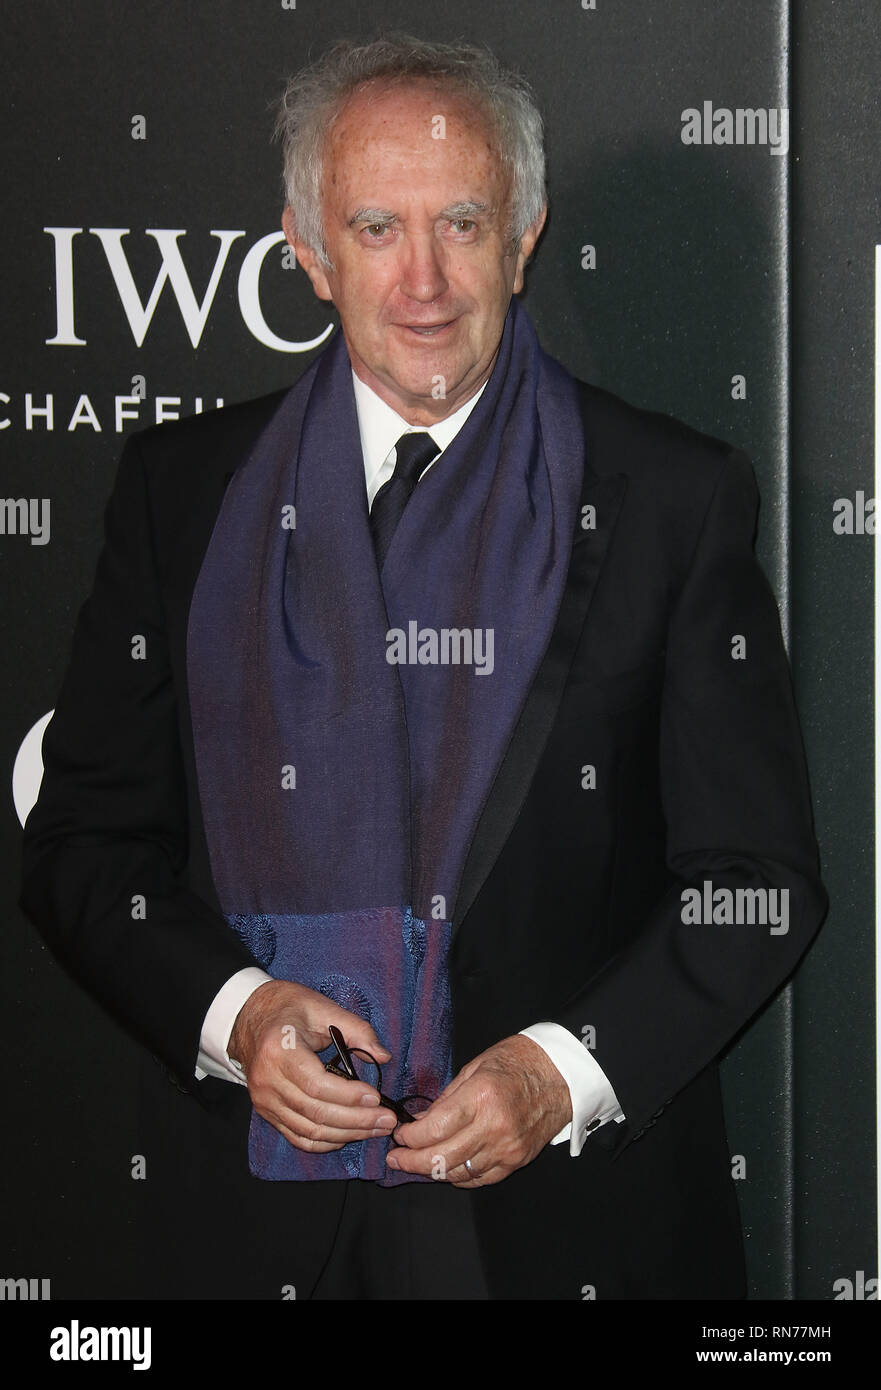 Oct 06, 2015 - Londres, Angleterre, Royaume-Uni - BFI Gala lumineux, Guildhall - Tapis Rouge photo montre des arrivées : Jonathan Pryce Banque D'Images